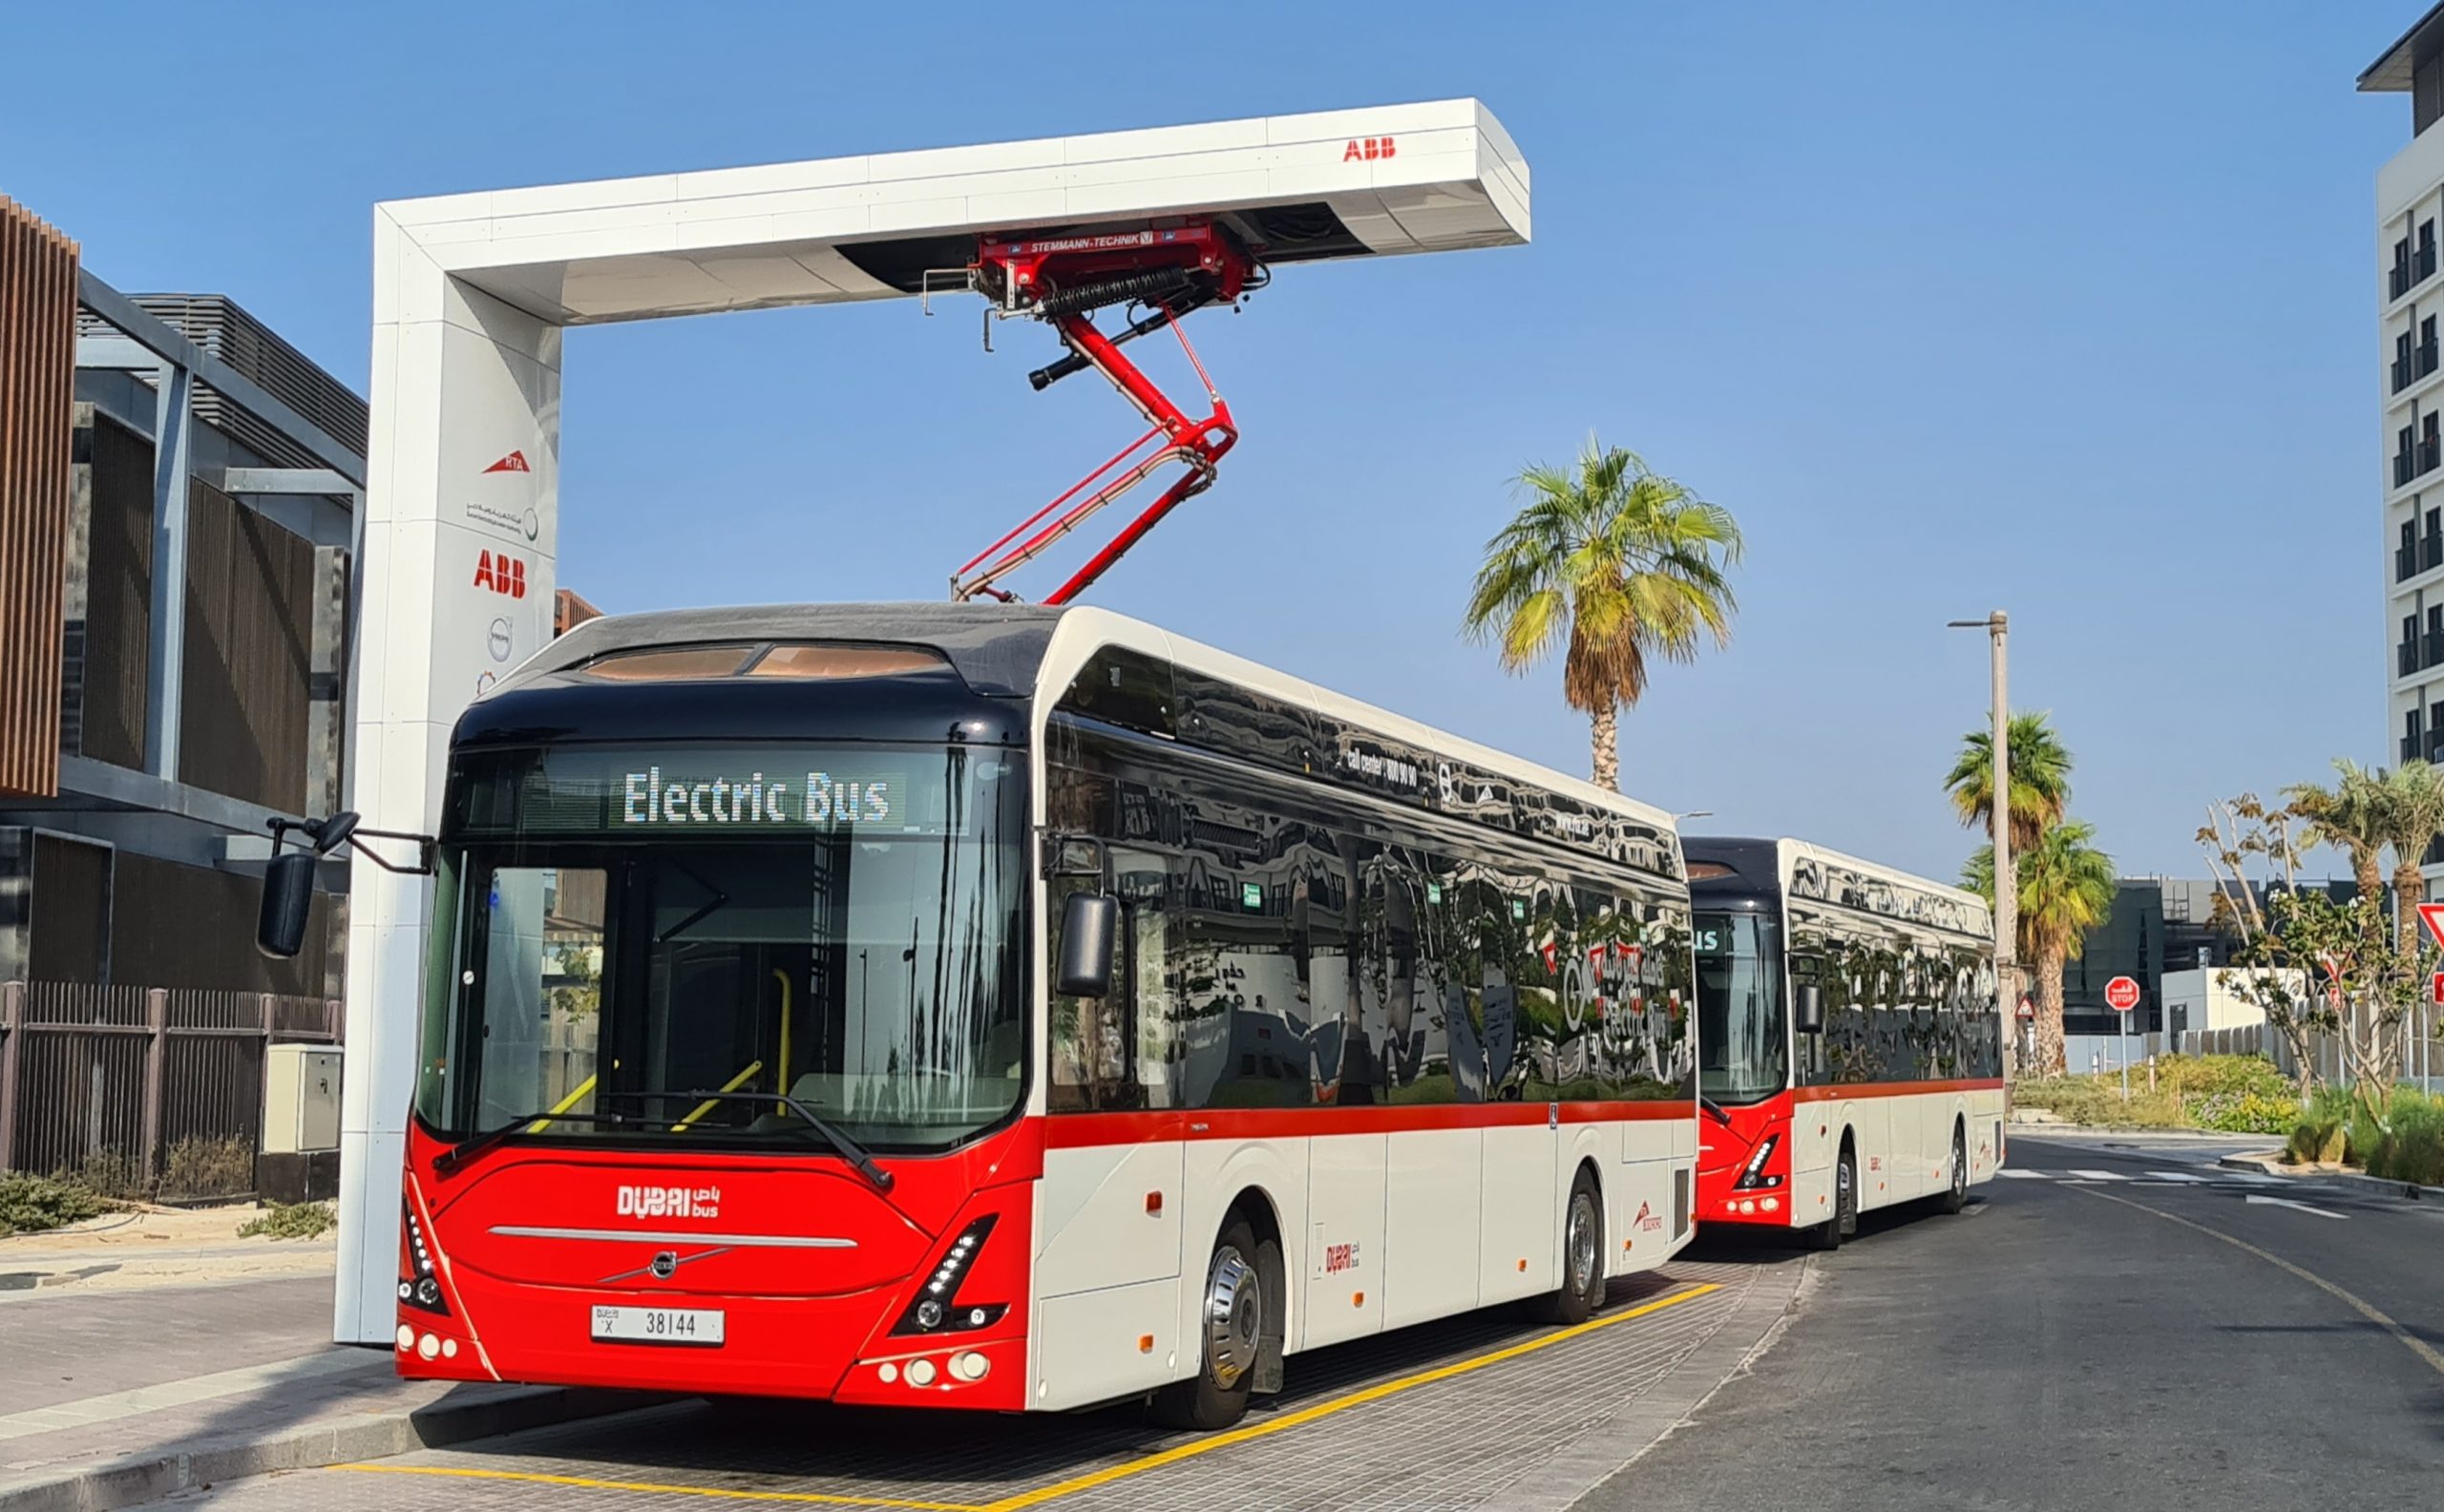 Elektromos Volvo buszokat tesztel Dubai